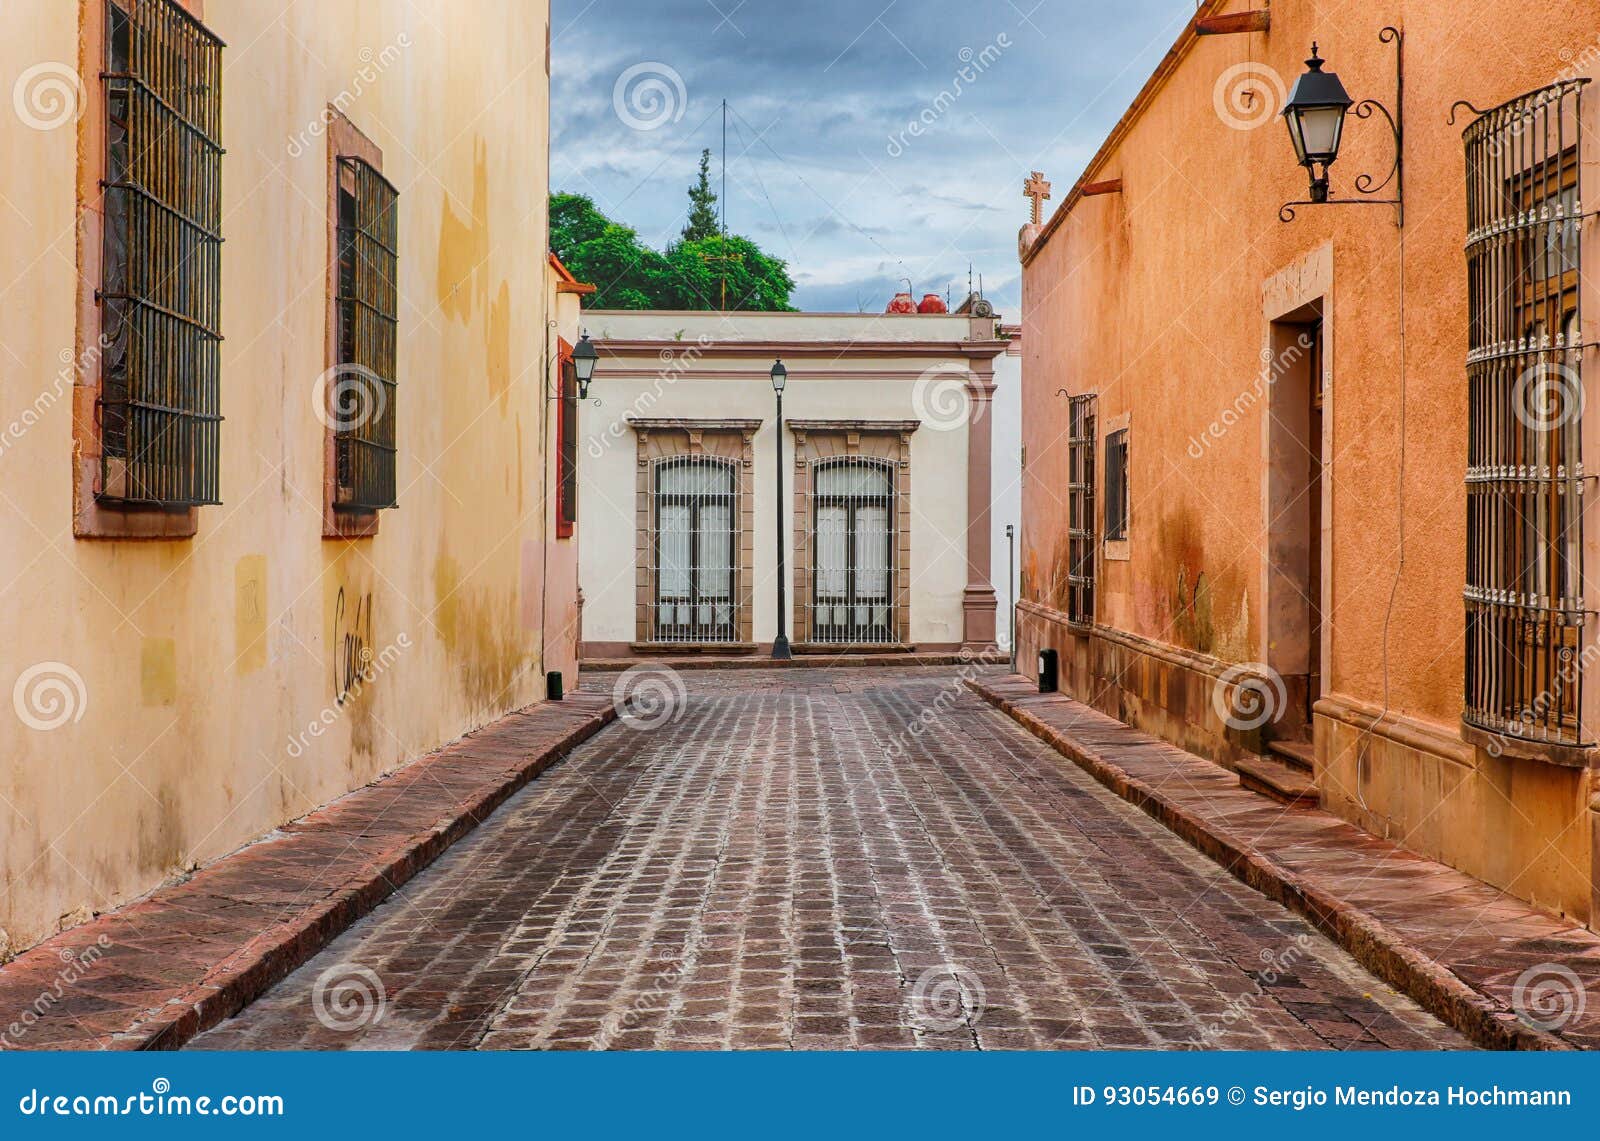 Street Of Queretaro Mexico Stock Image Image Of Latin - 